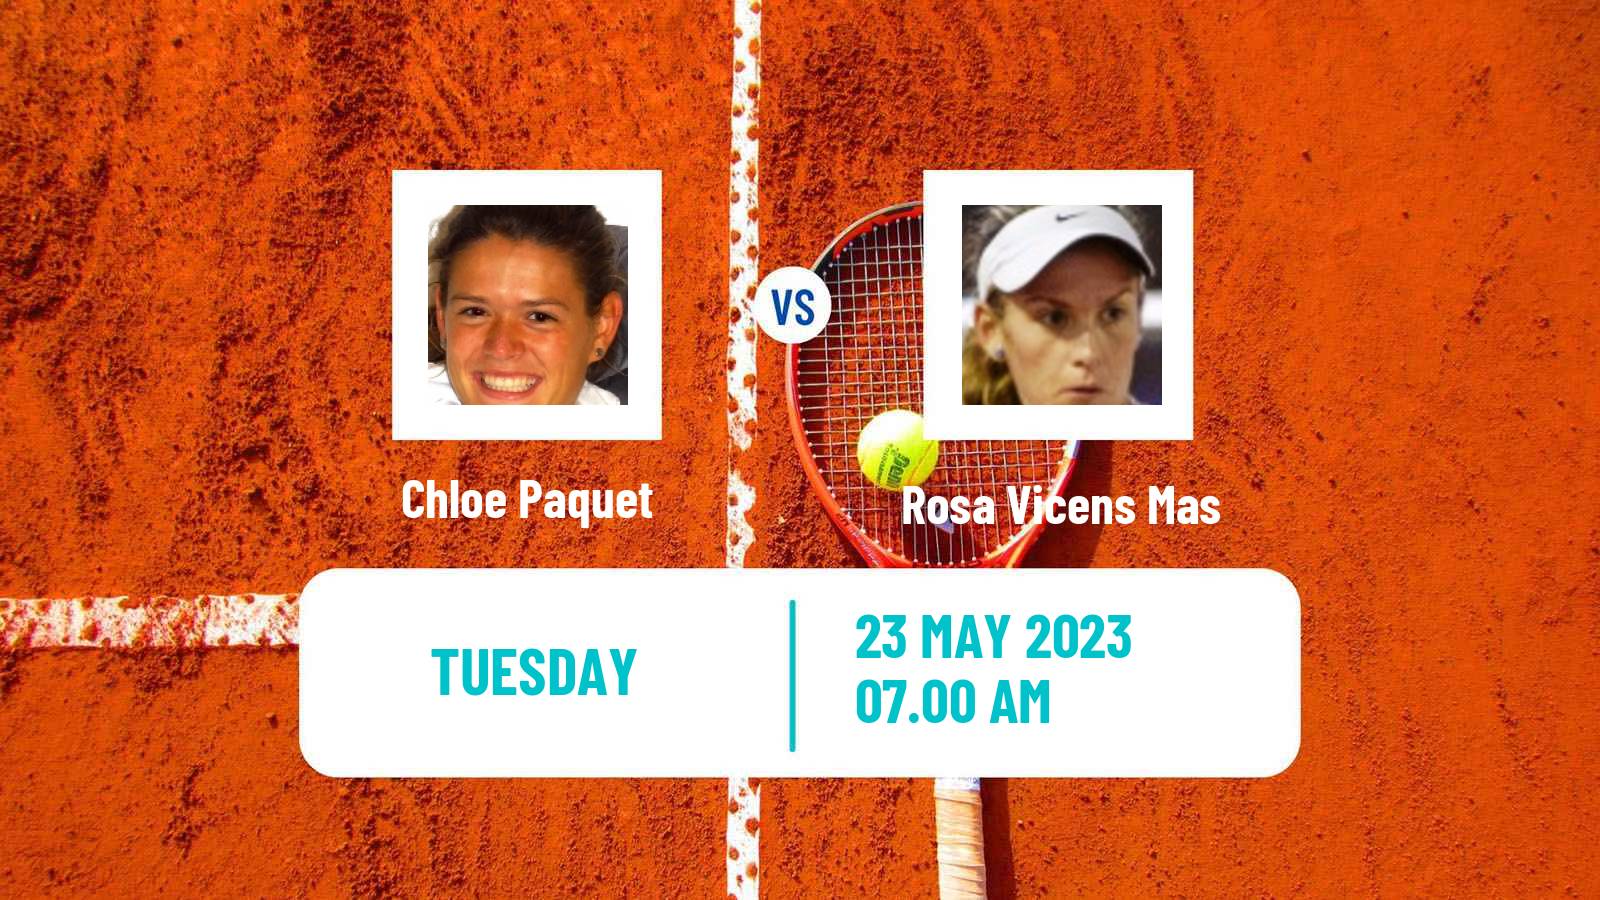 Tennis WTA Roland Garros Chloe Paquet - Rosa Vicens Mas